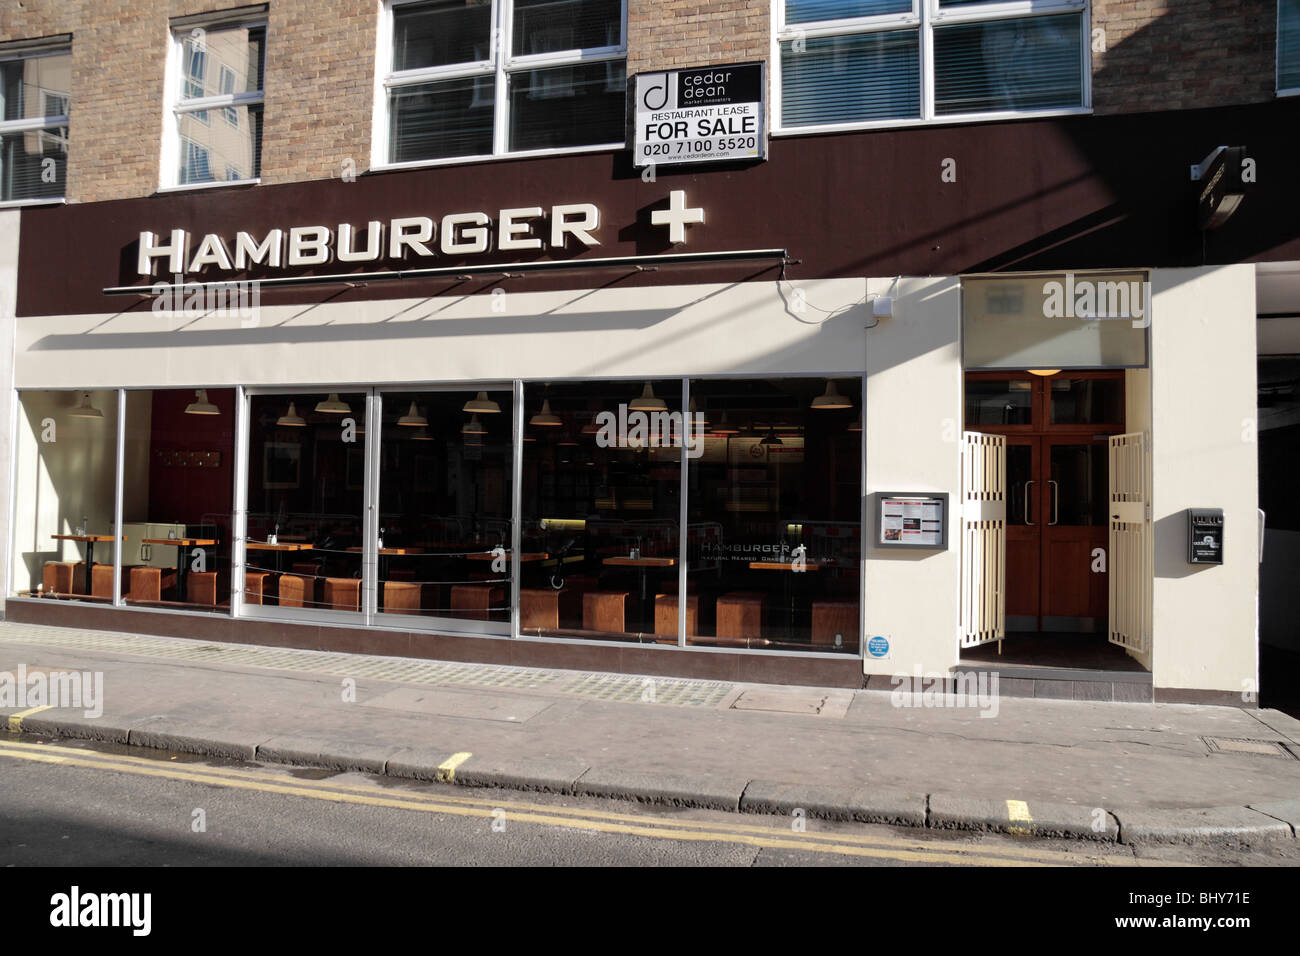 The shop front of Hamburger plus restaurant on Dean Street, London, UK. Stock Photo